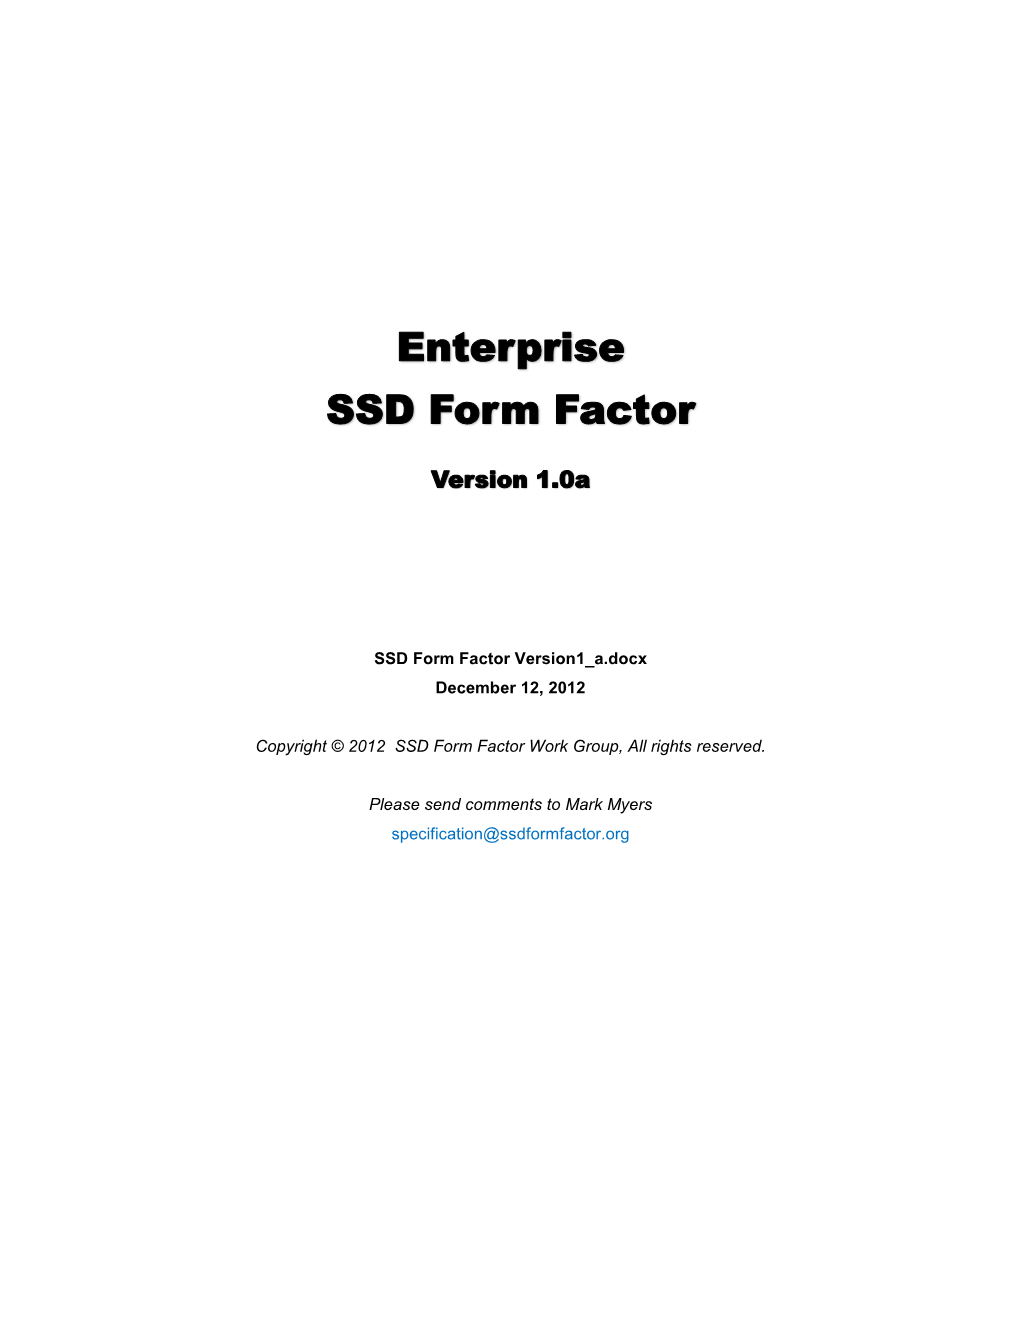 Enterprise SSD Form Factor Version